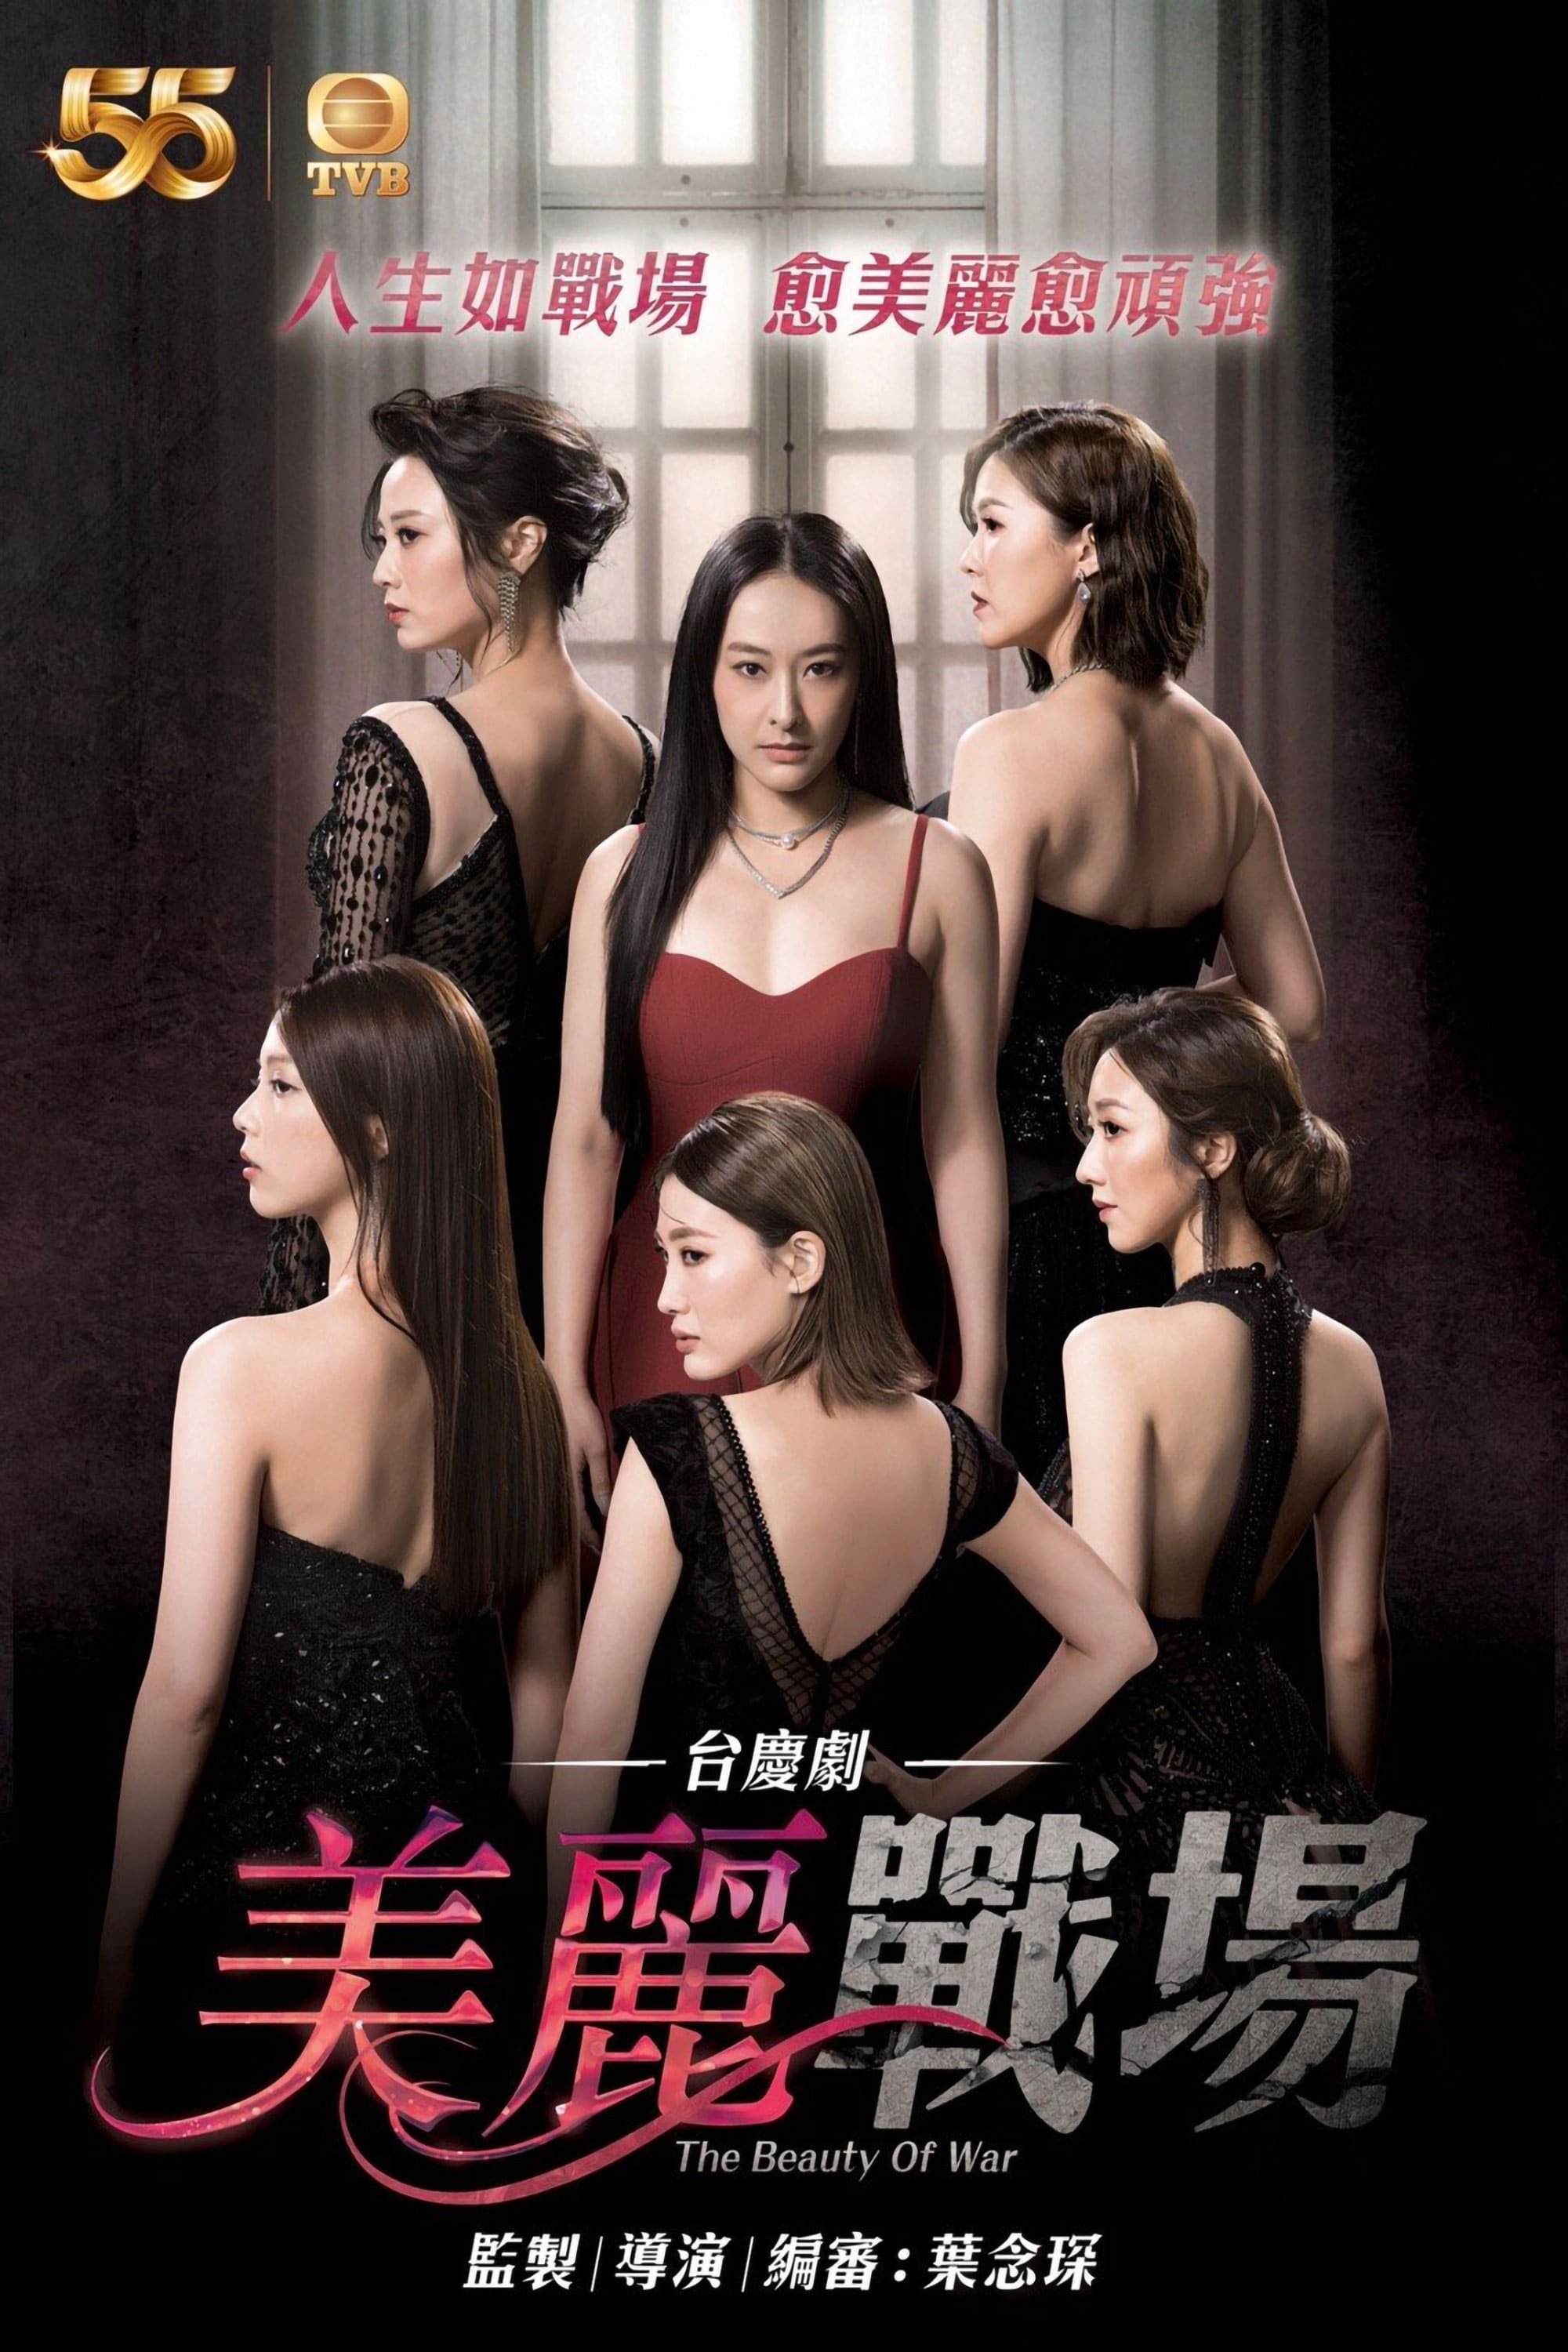 TV ratings for The War Of Beauties (美麗戰場) in Ireland. TVB Jade TV series